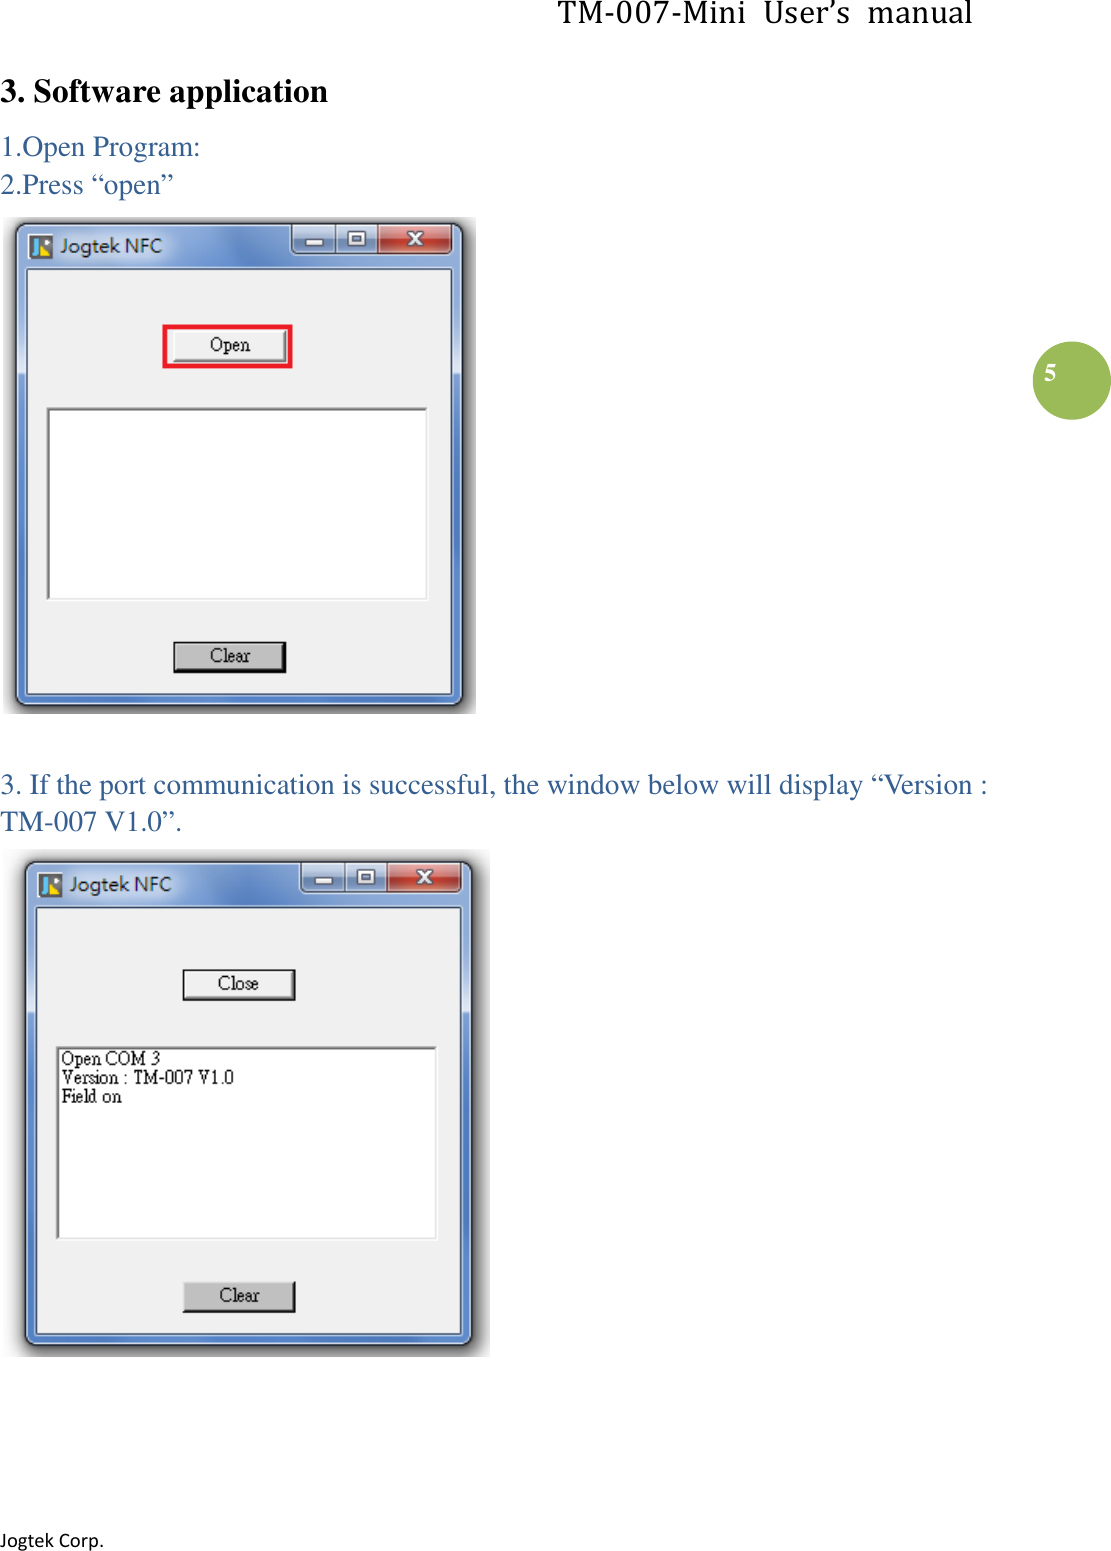 TM-007-Mini  User’s  manual Jogtek Corp.                                                                   5 3. Software application 1.Open Program: 2.Press “open”   3. If the port communication is successful, the window below will display “Version : TM-007 V1.0”.    